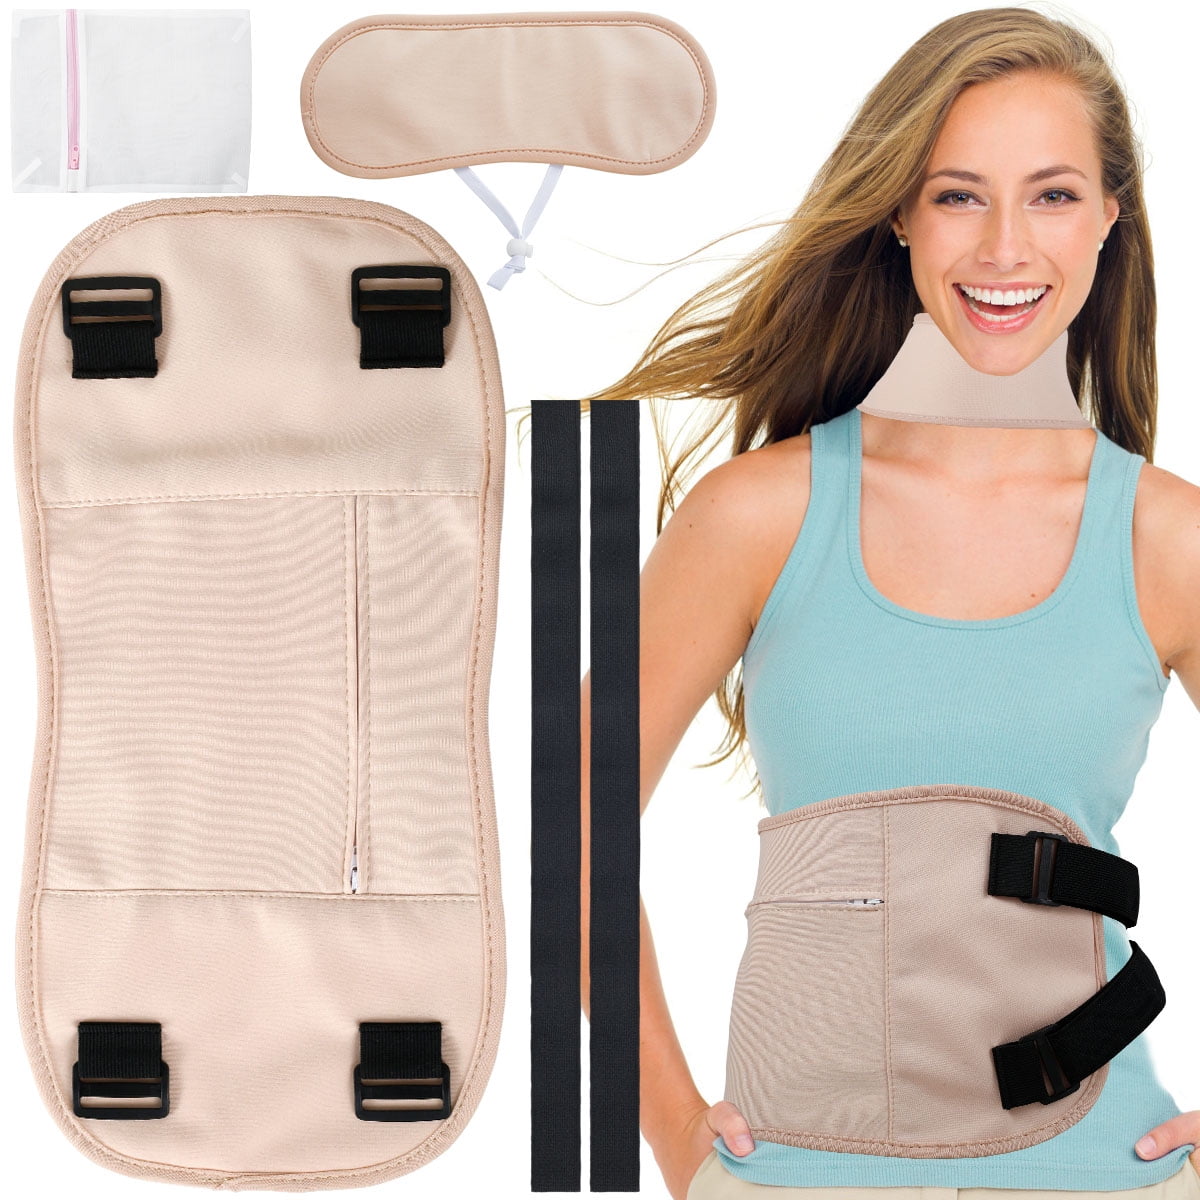 Castor Oil Bag Self-help Conditioning Essential Care Aid Sleep Reusable  Strap* | eBay